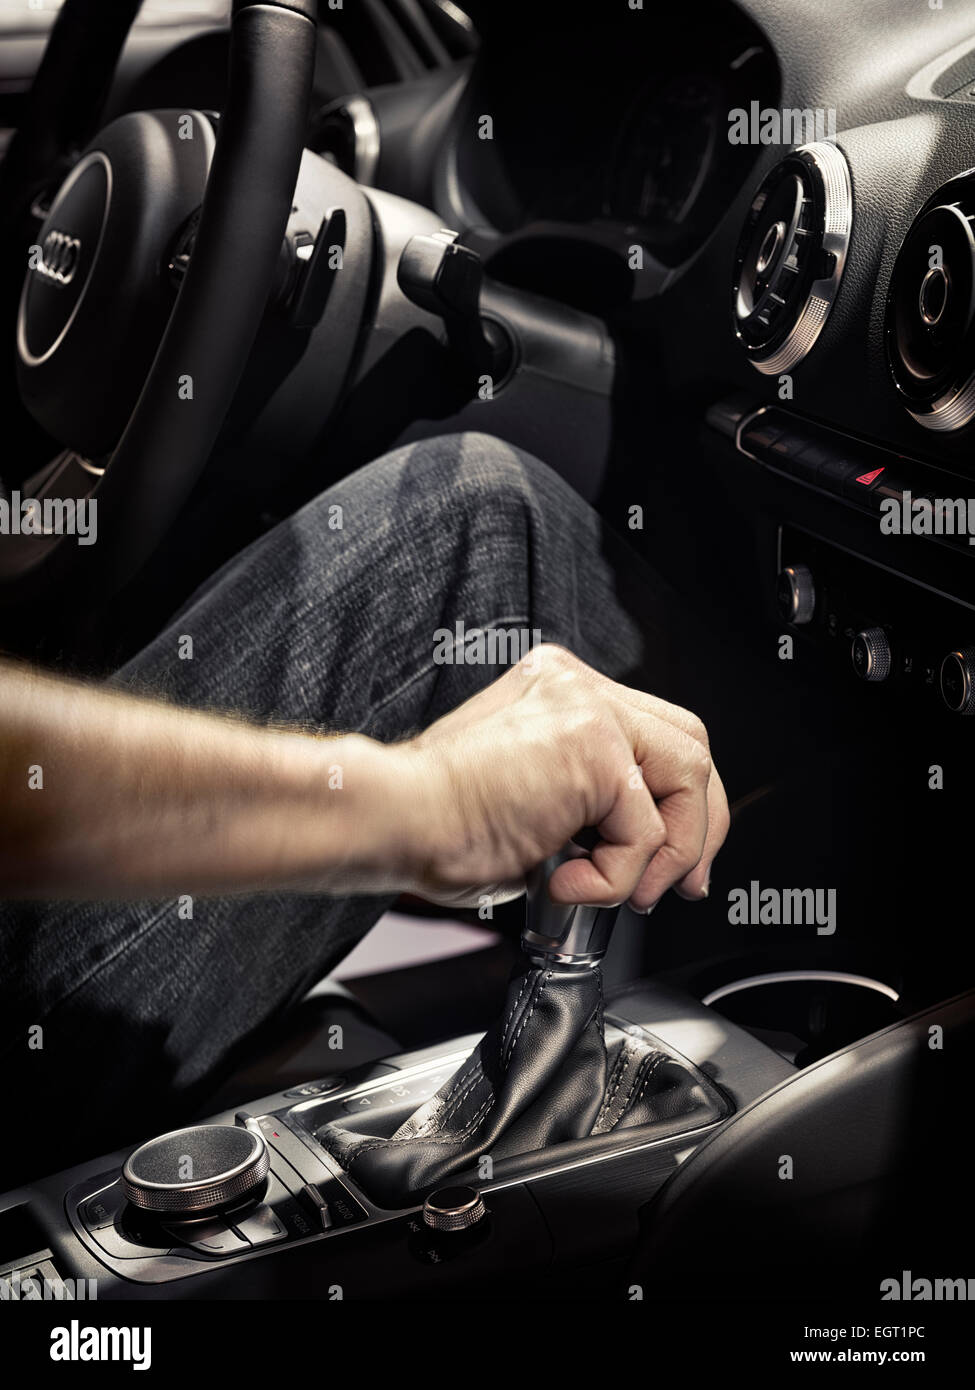 Car gear shift -Fotos und -Bildmaterial in hoher Auflösung – Alamy